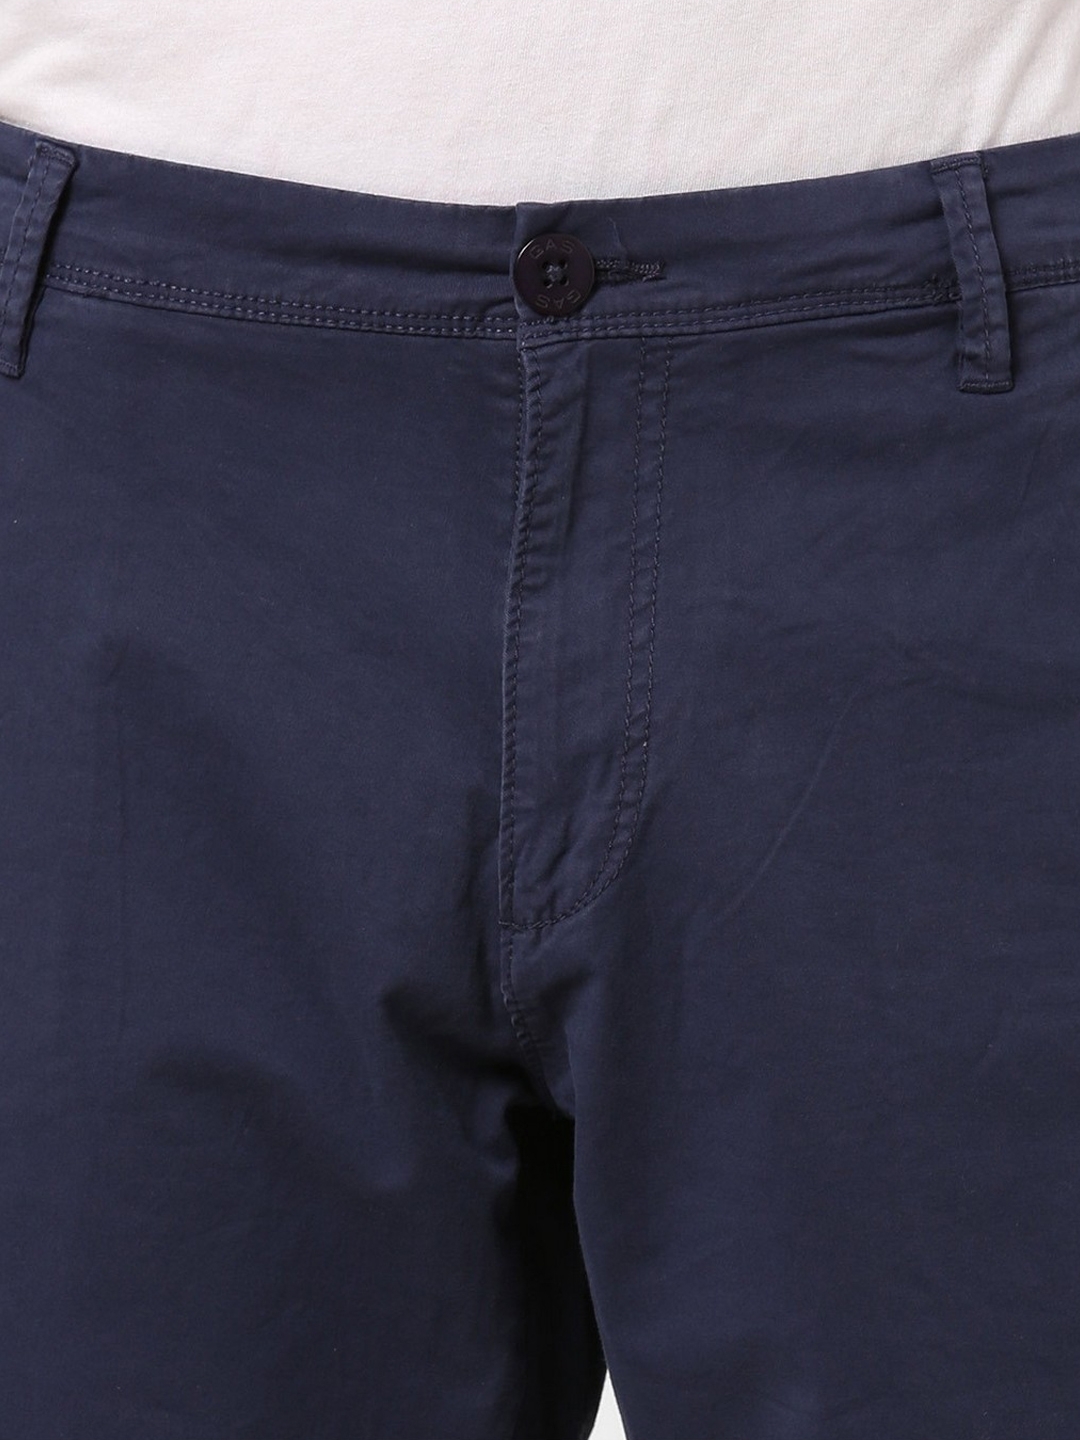 Men's Grimm solid blue shorts